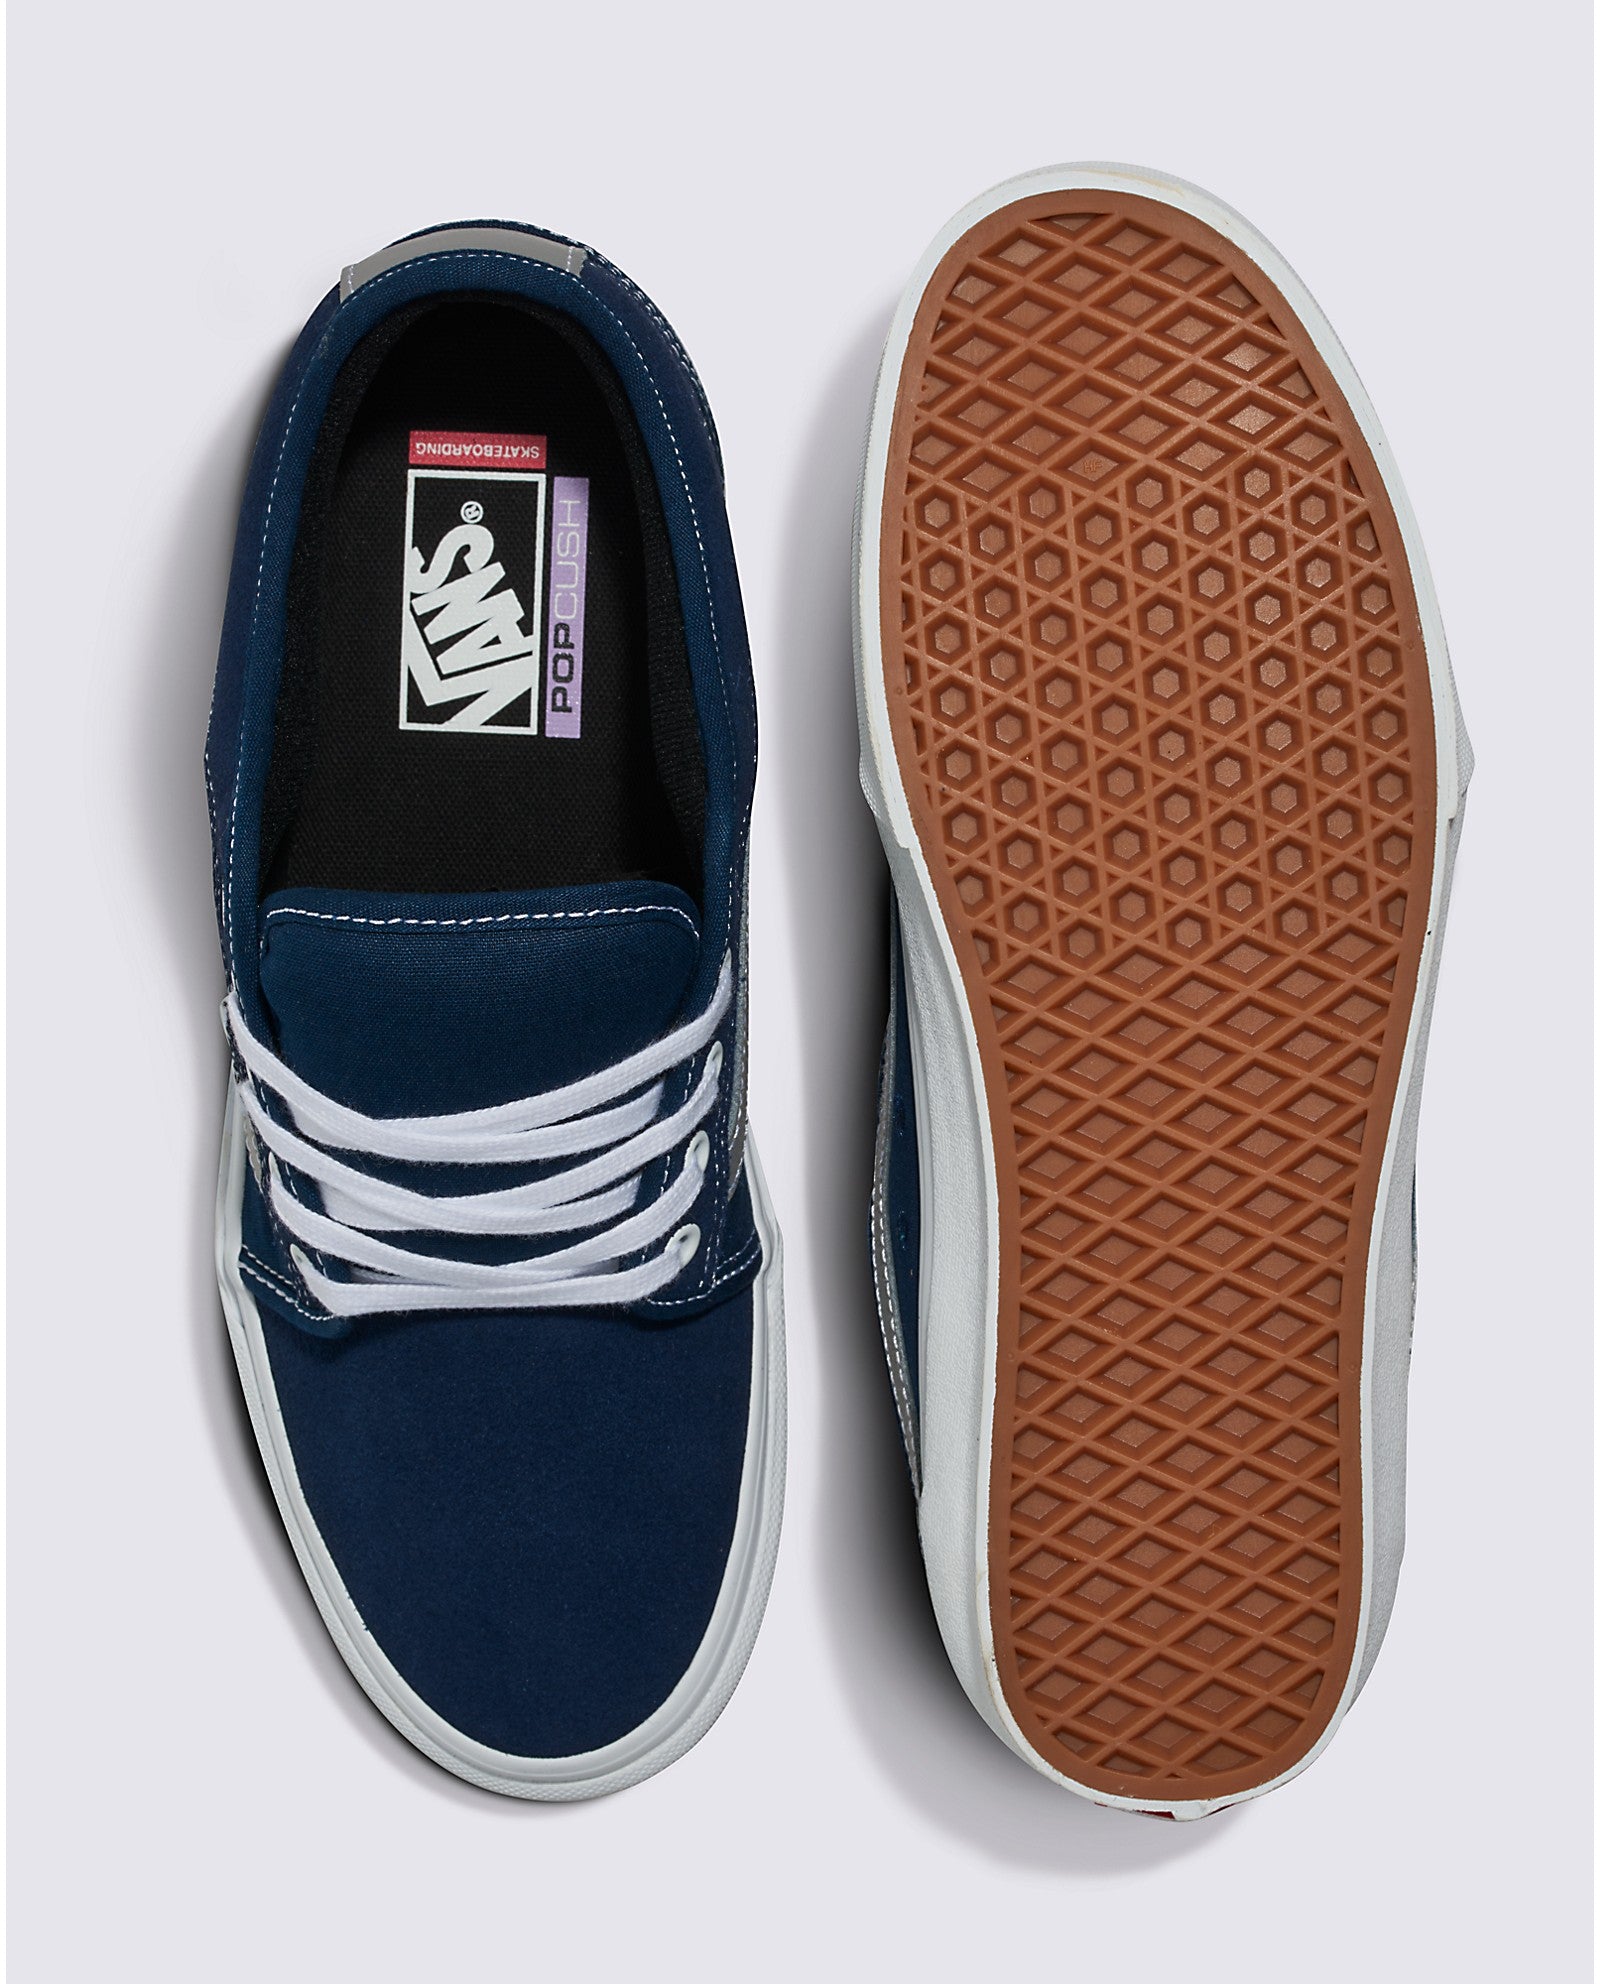 Navy/Grey Chukka Low Sidestripe Vans Skate Shoe Top/Bottom